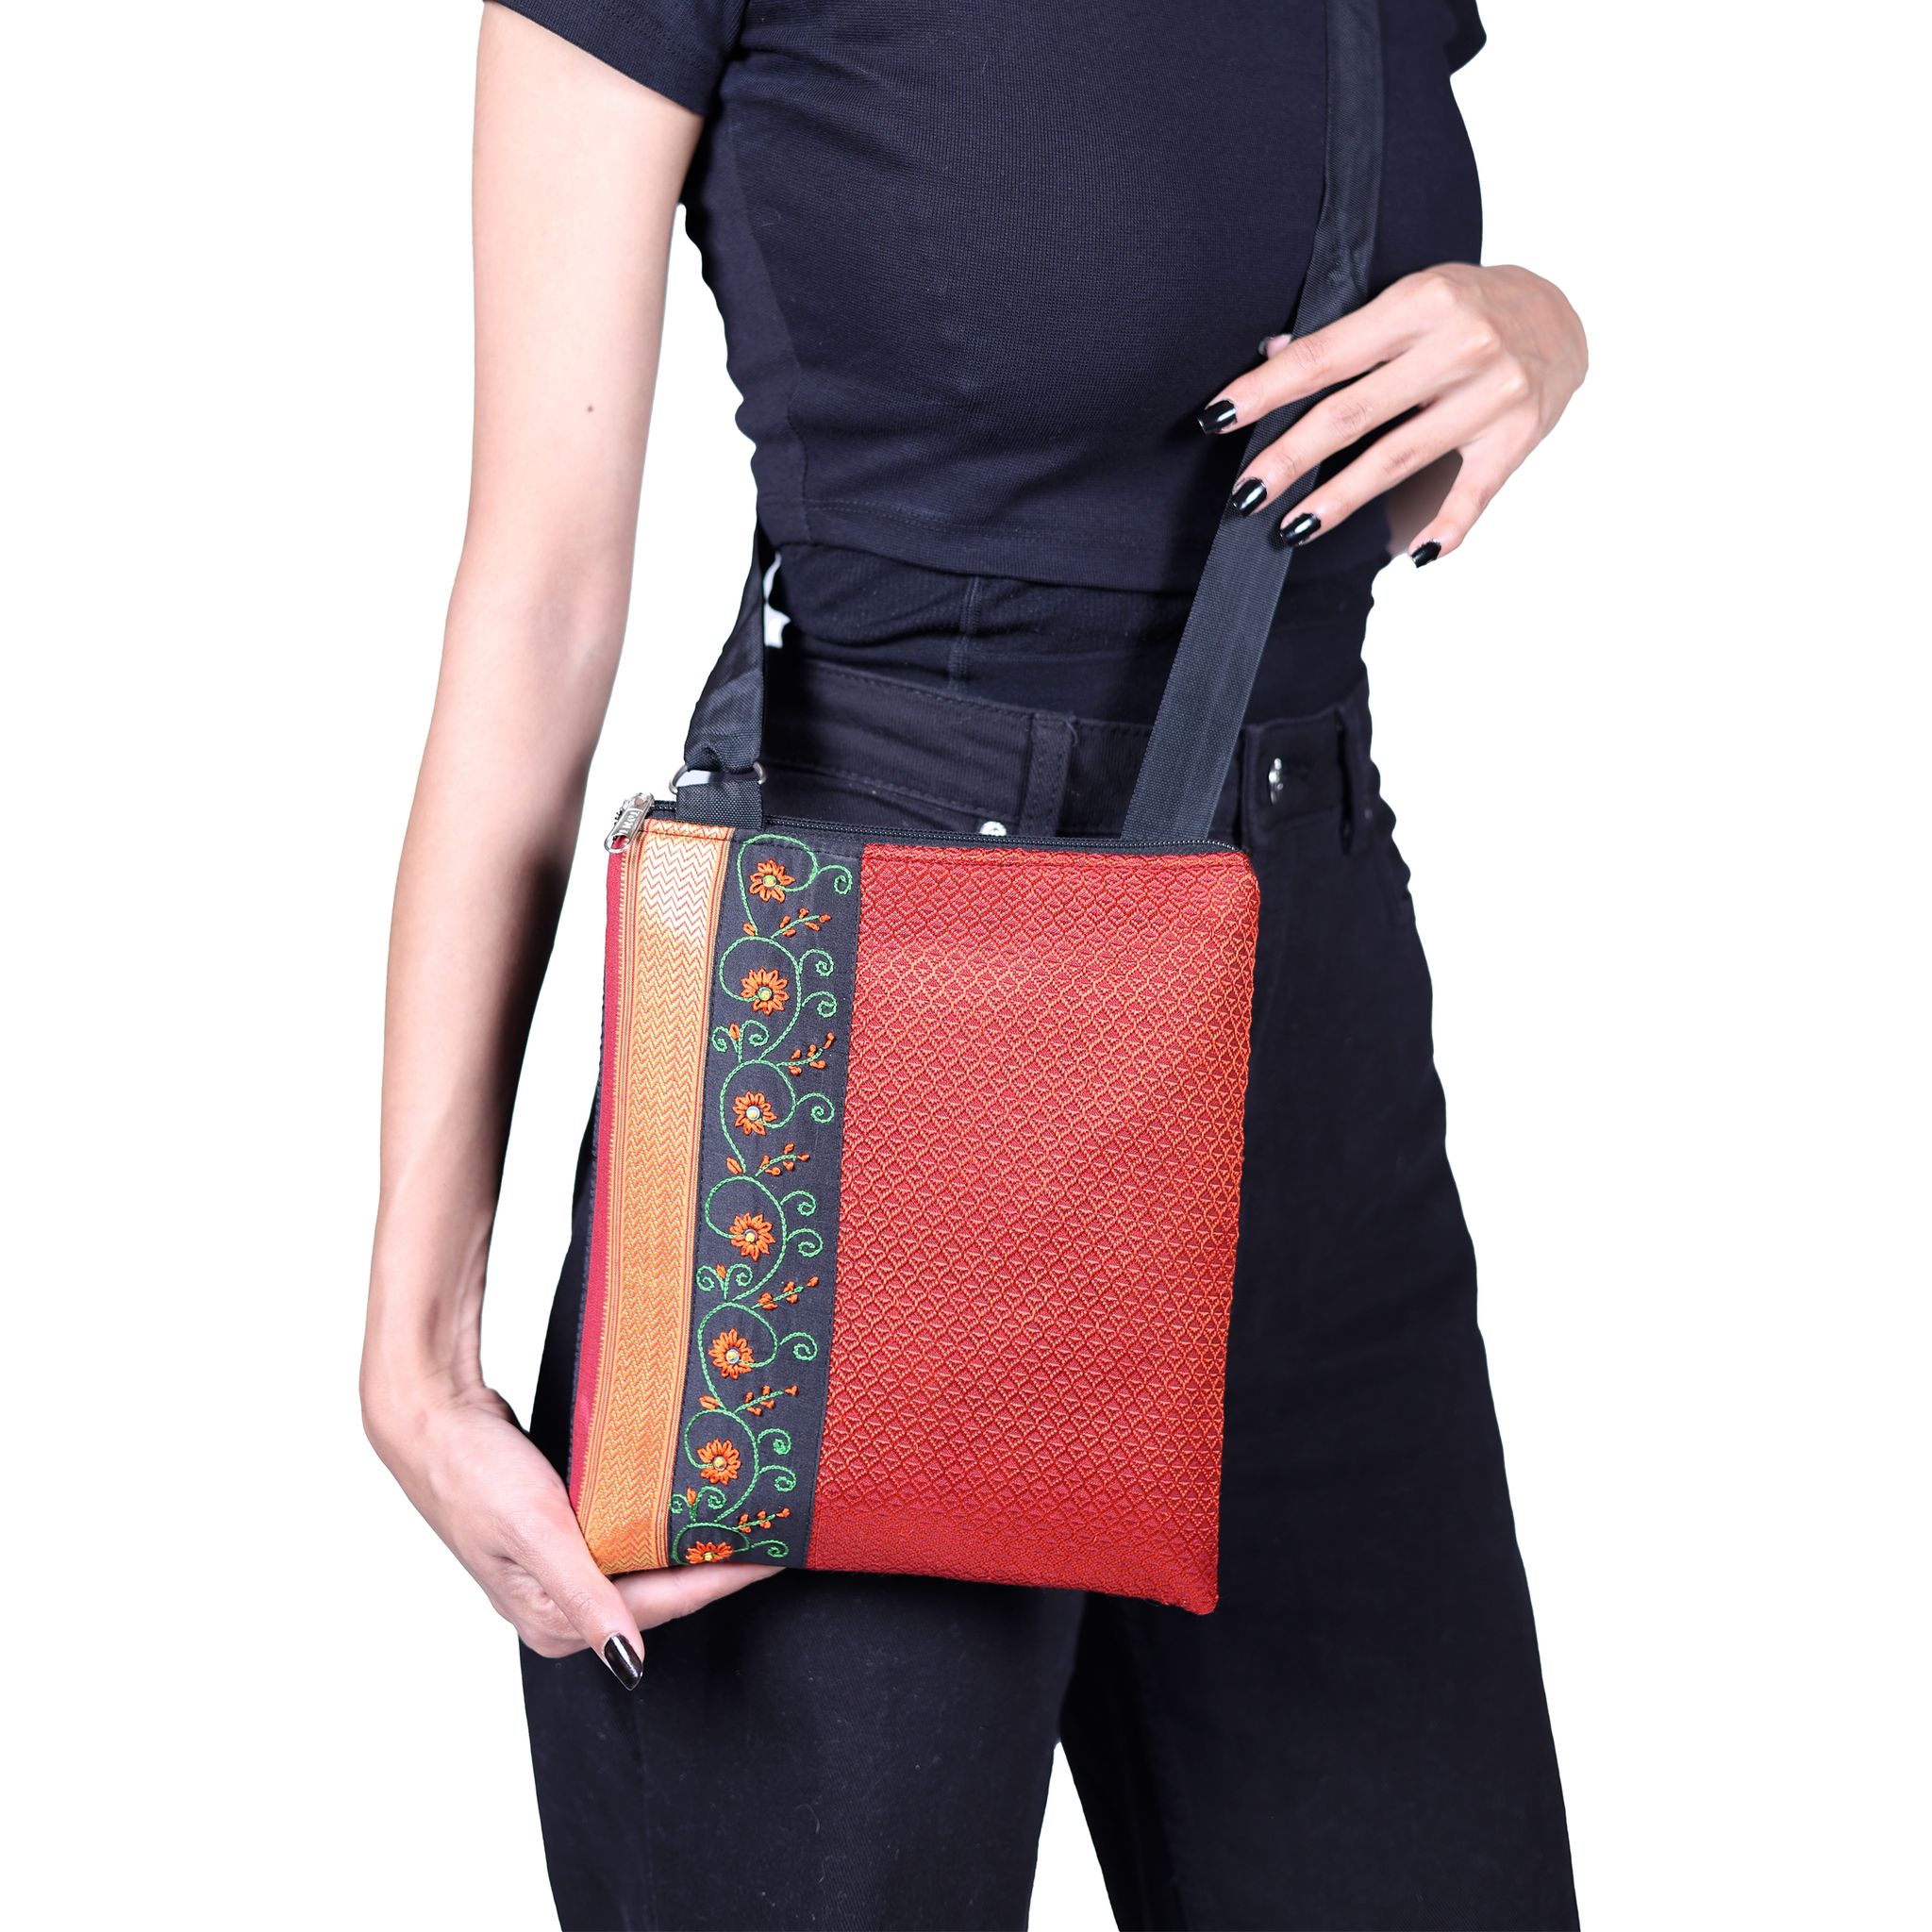 WILDHORN® Genuine Leather Ladies Sling Bag | Crossbody Bag | Shoulder Bag  with Adjustable Strap for Girls & Women WHLB1033BLUE. in Dandeli at best  price by Wildhorn India - Justdial